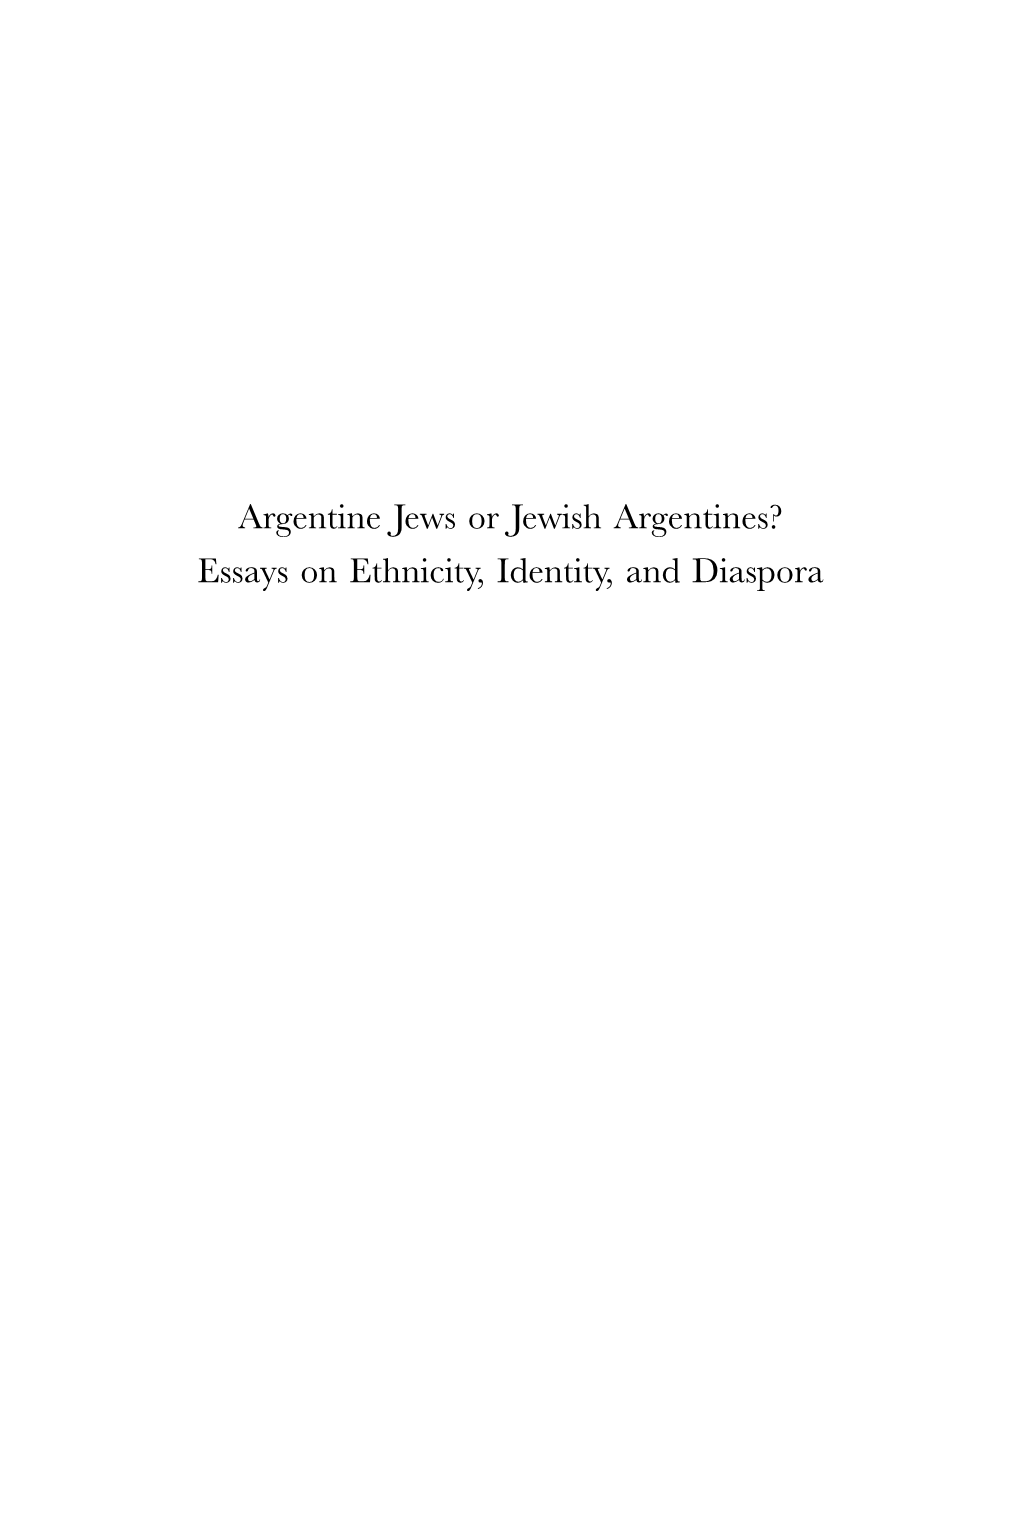 Essays on Ethnicity, Identity, and Diaspora Jewish Identities in a Changing World